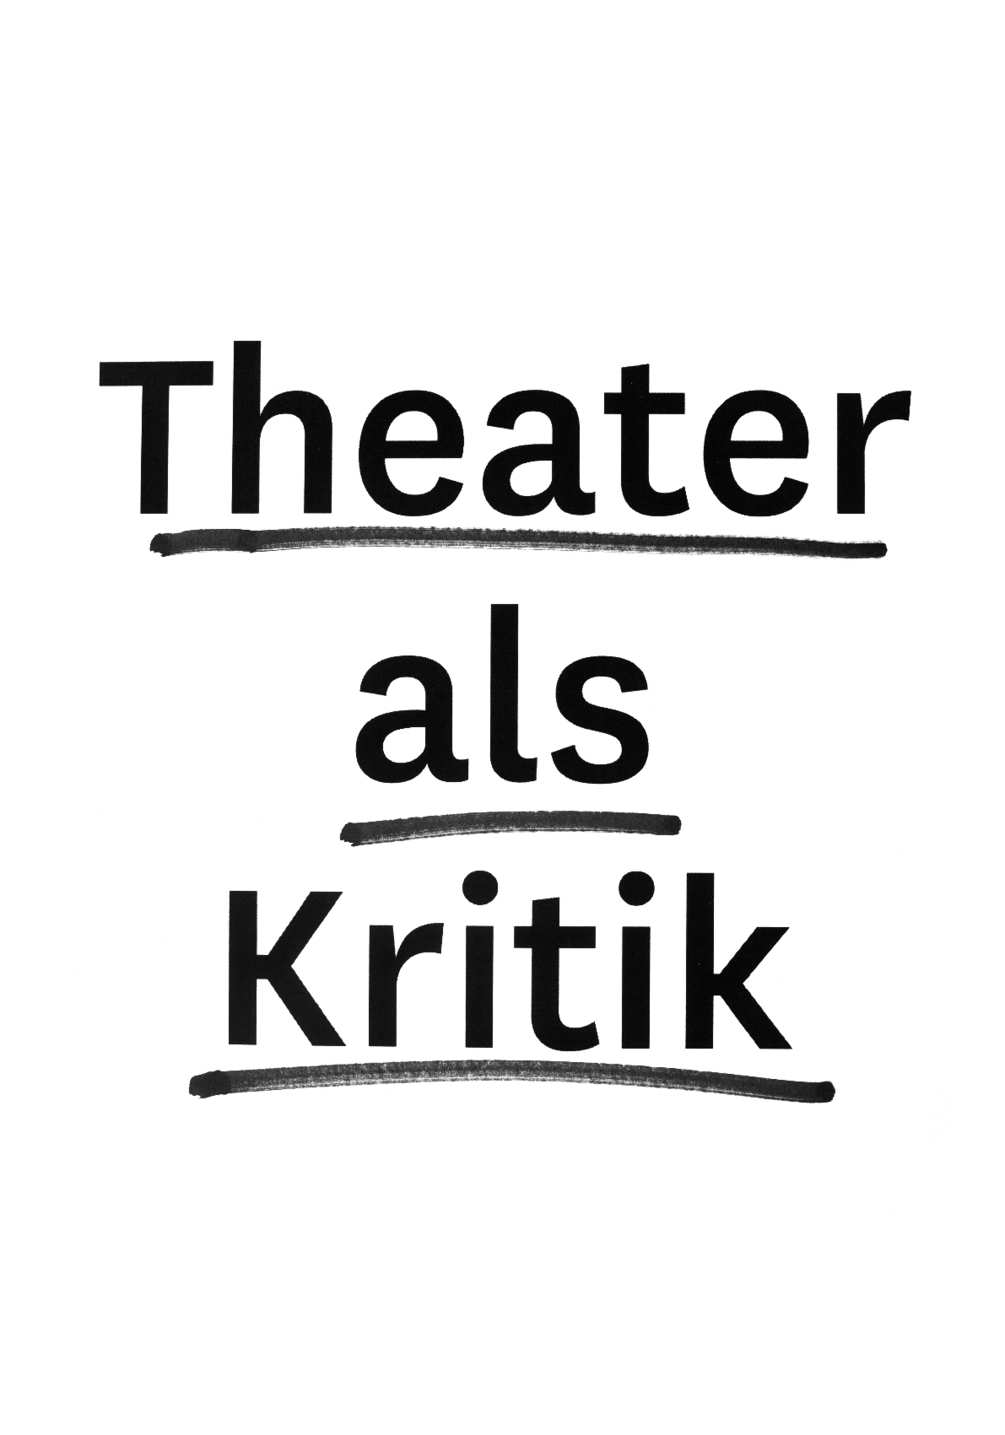 theater-as-critique-slip-04-1005x1435px